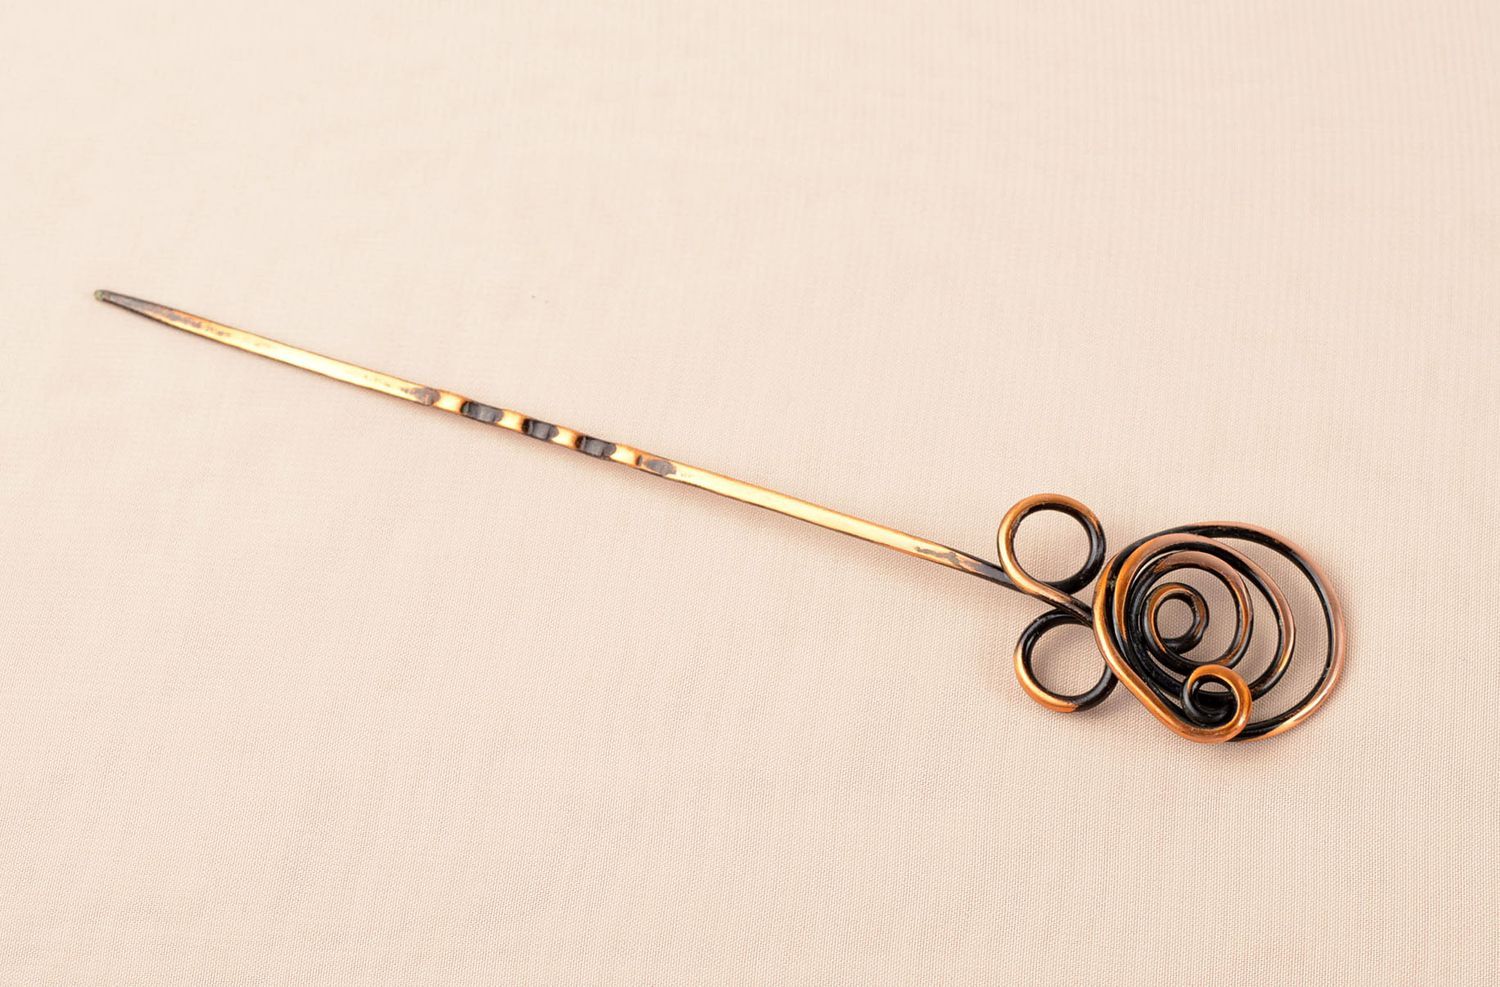 Handmade hair pin designer hair accessory gift ideas metal hair pin gift for her photo 5